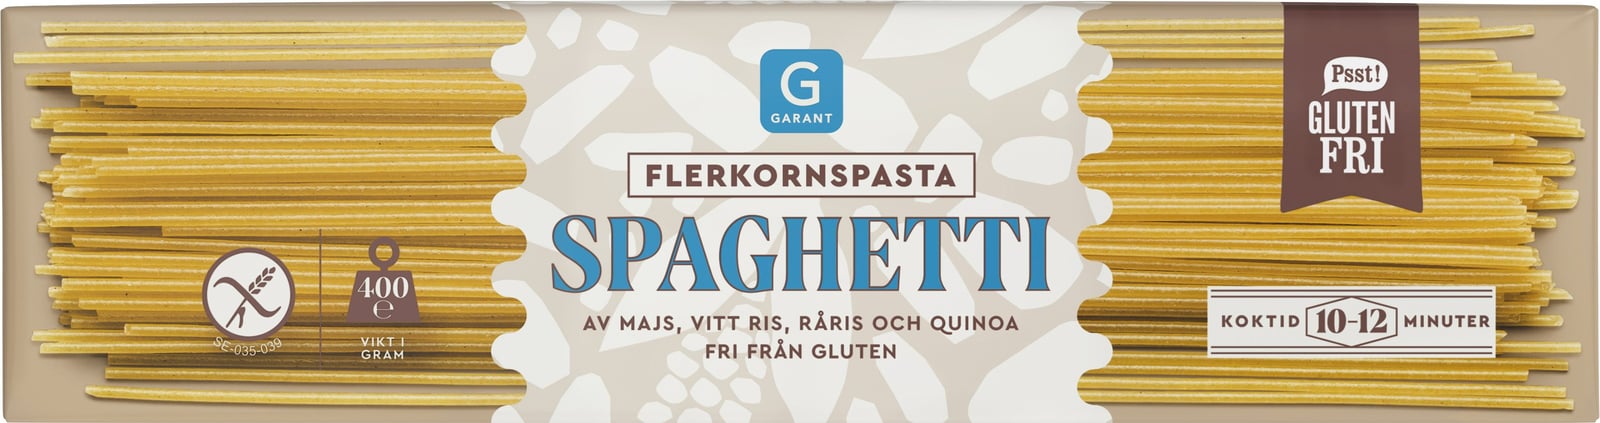 Garant Glutenfri Spaghetti Flerkornspasta 400 g